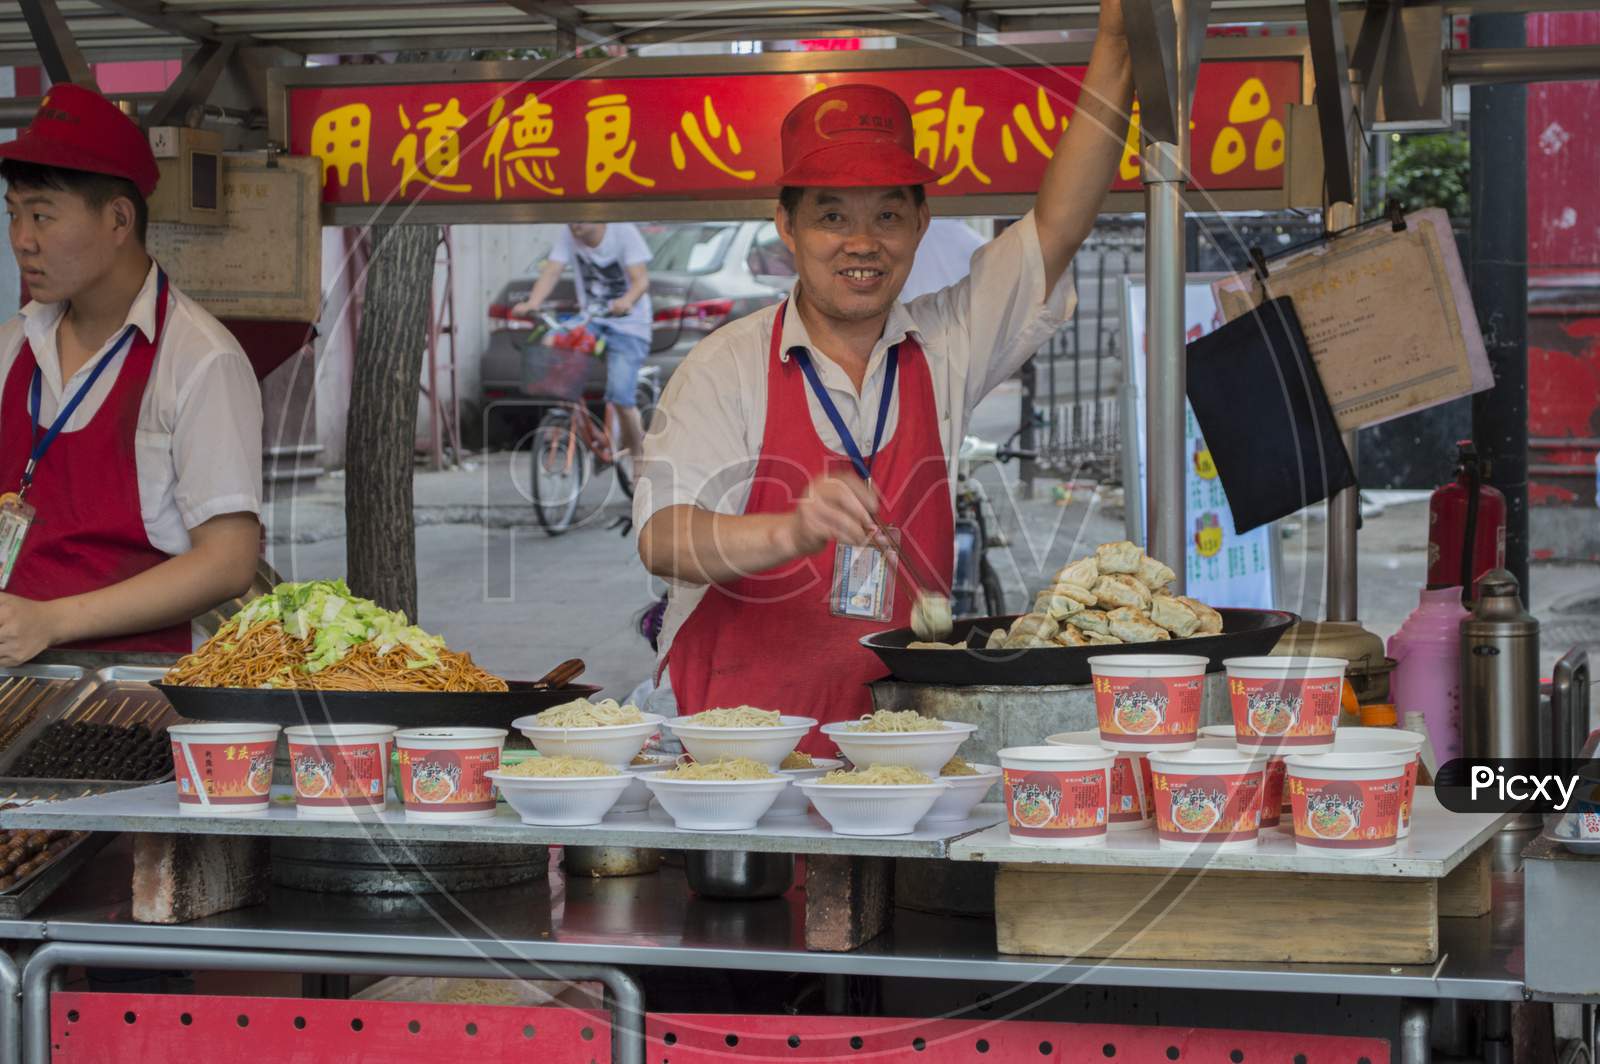 Vendors Selling Street Food In Wangfujing Street In Downtown Beijing, China